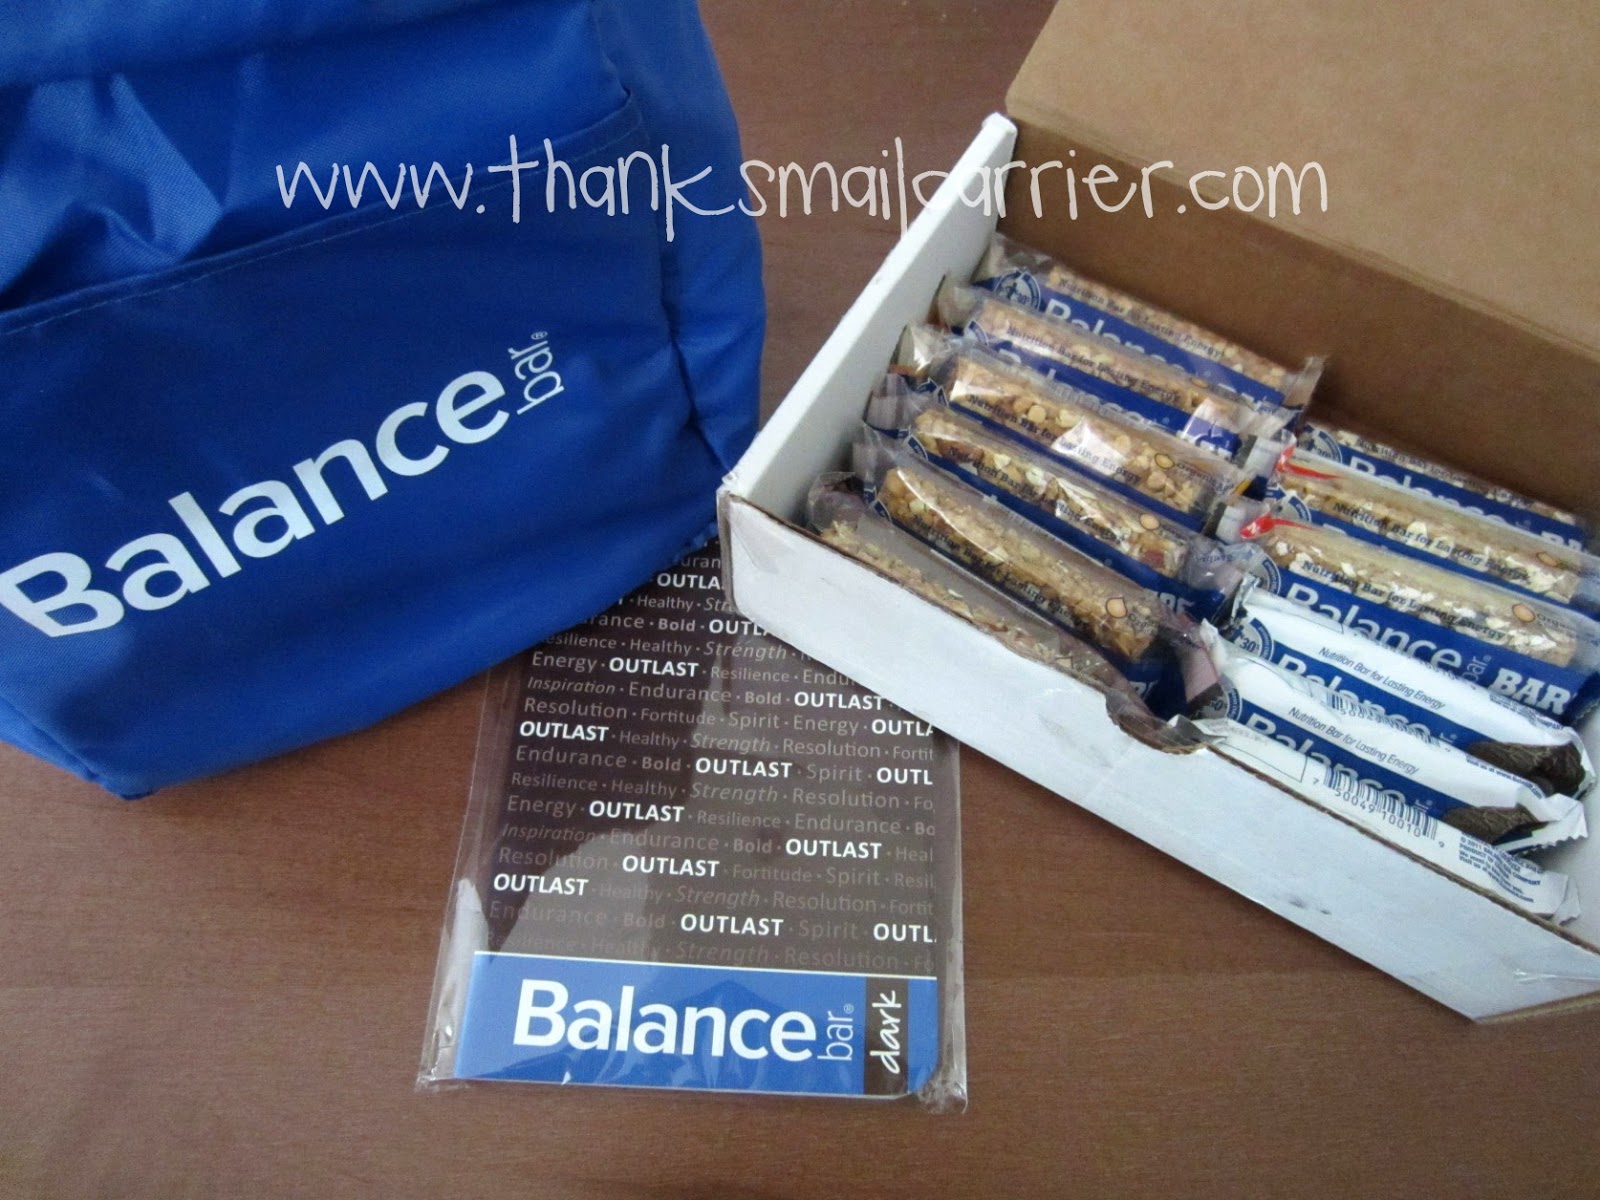 Balance Bar giveaway